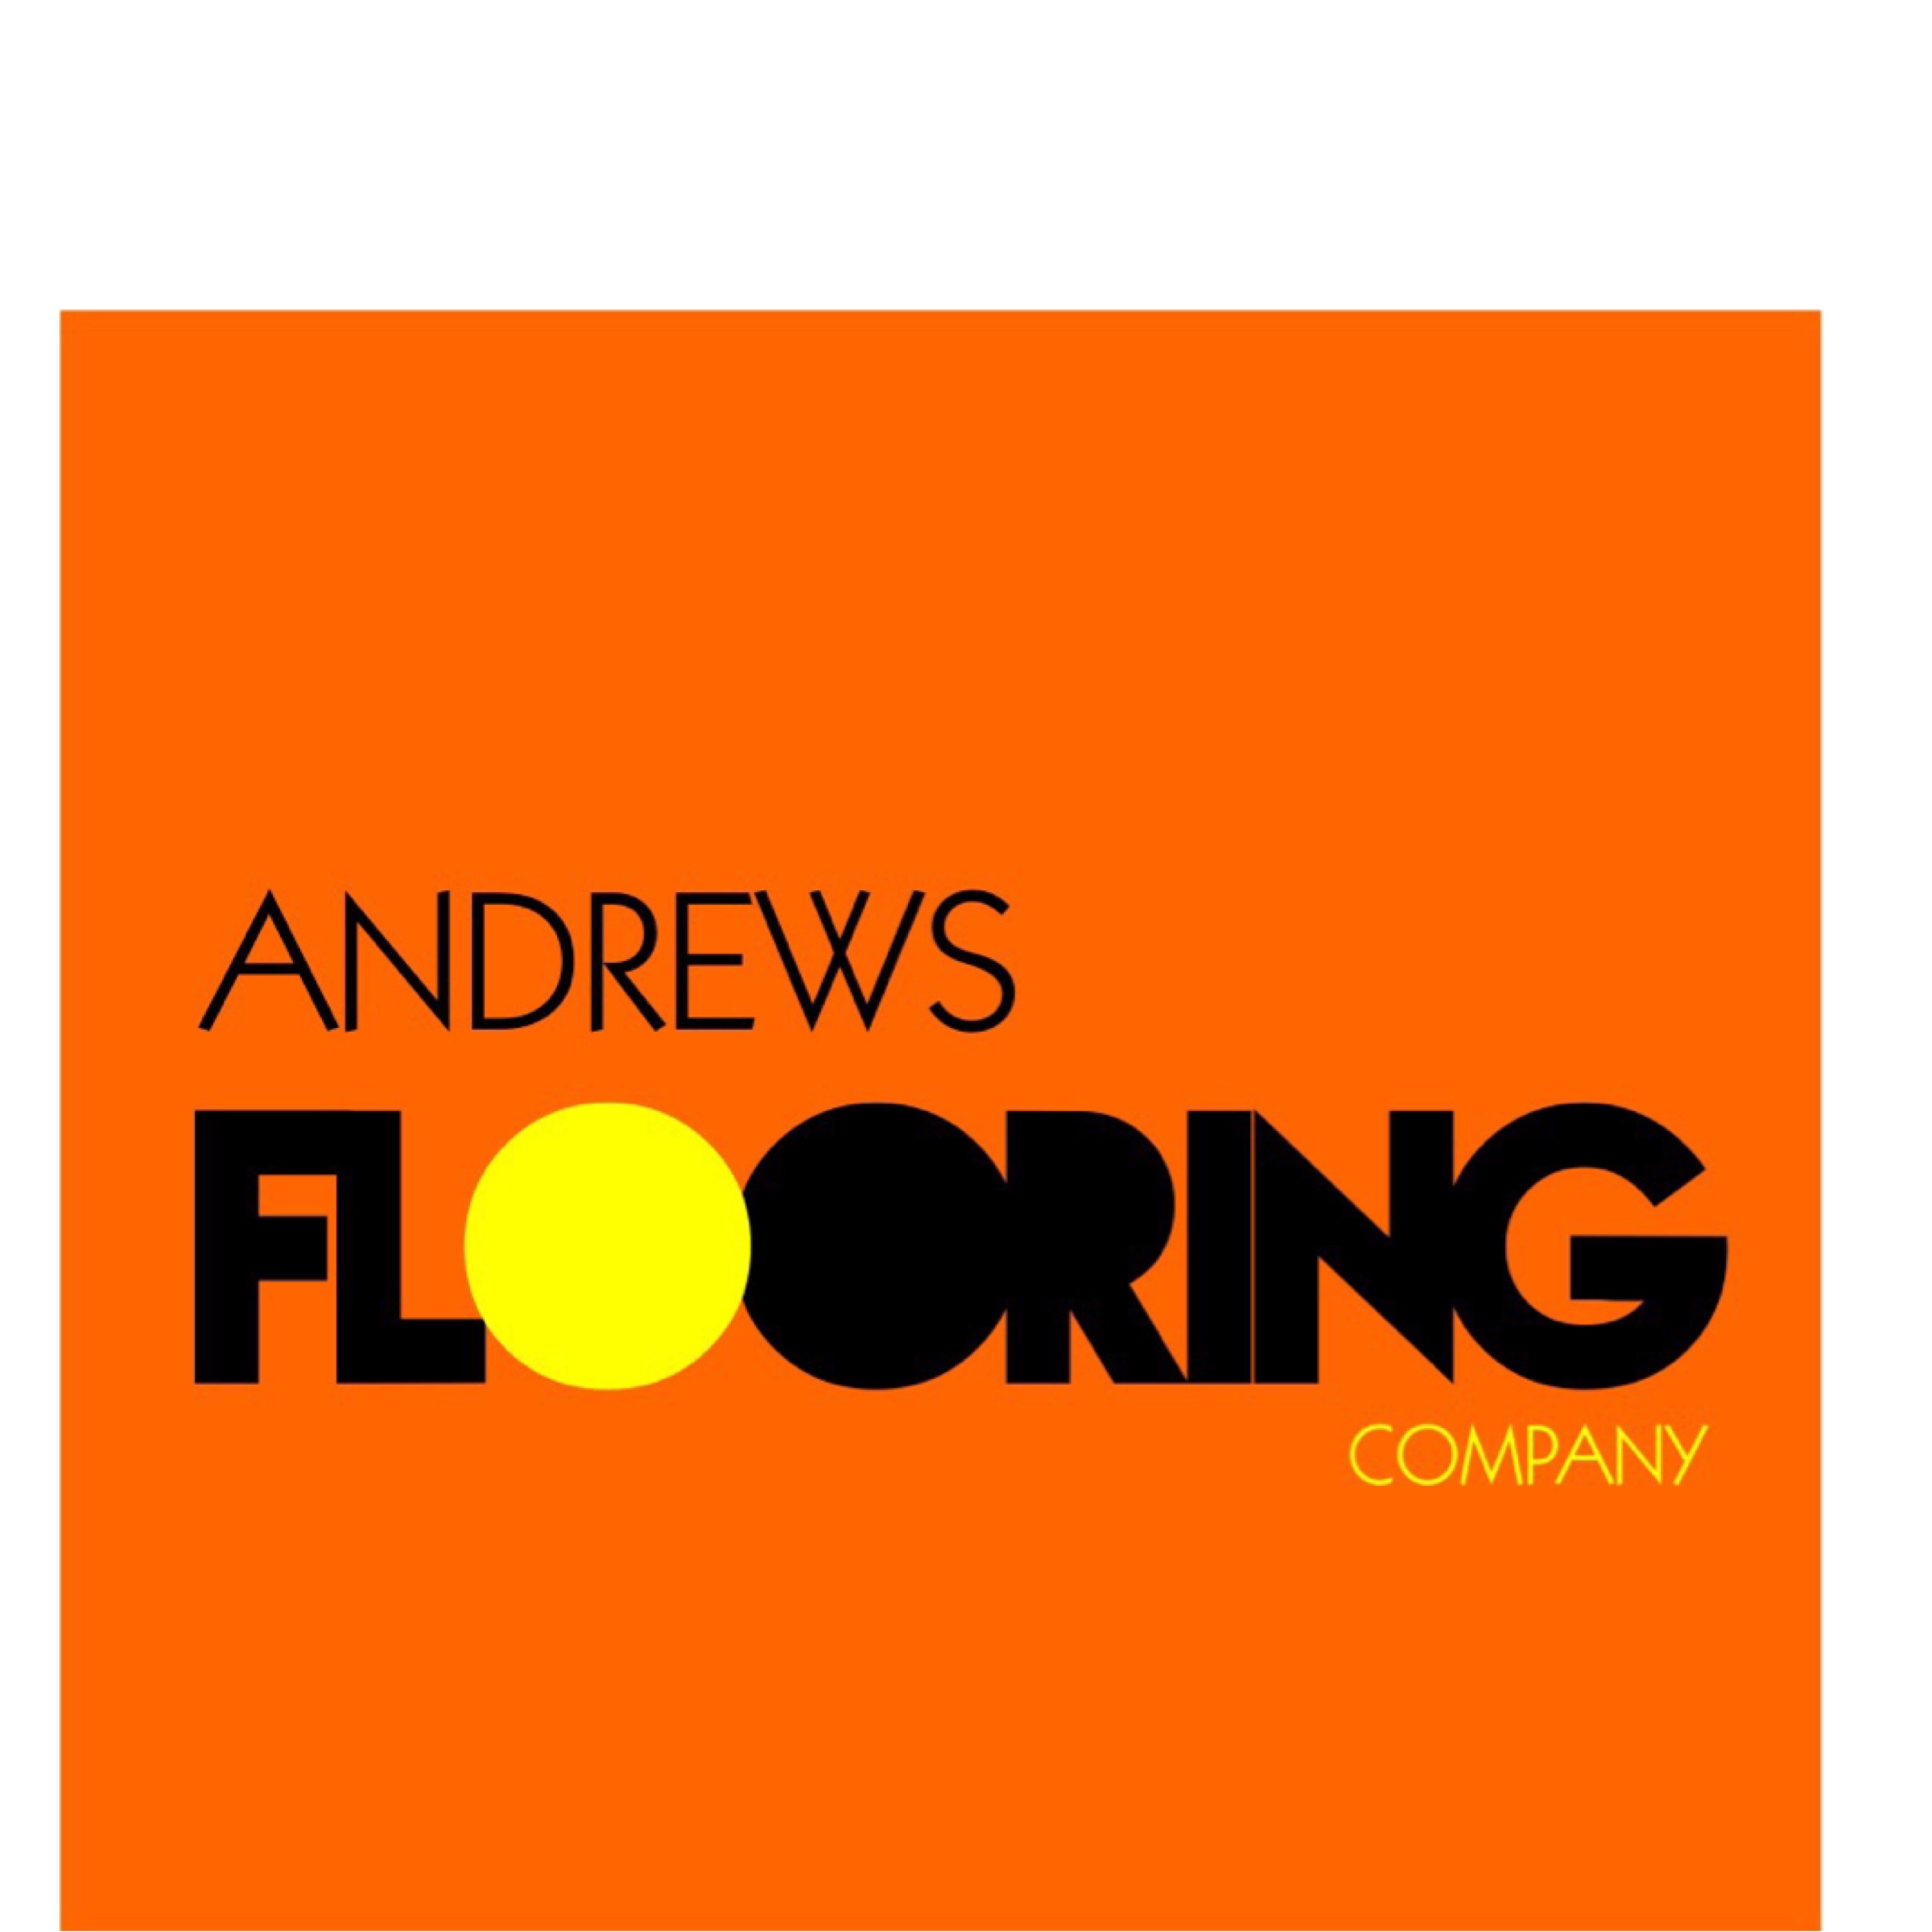 Andrews Flooring Company